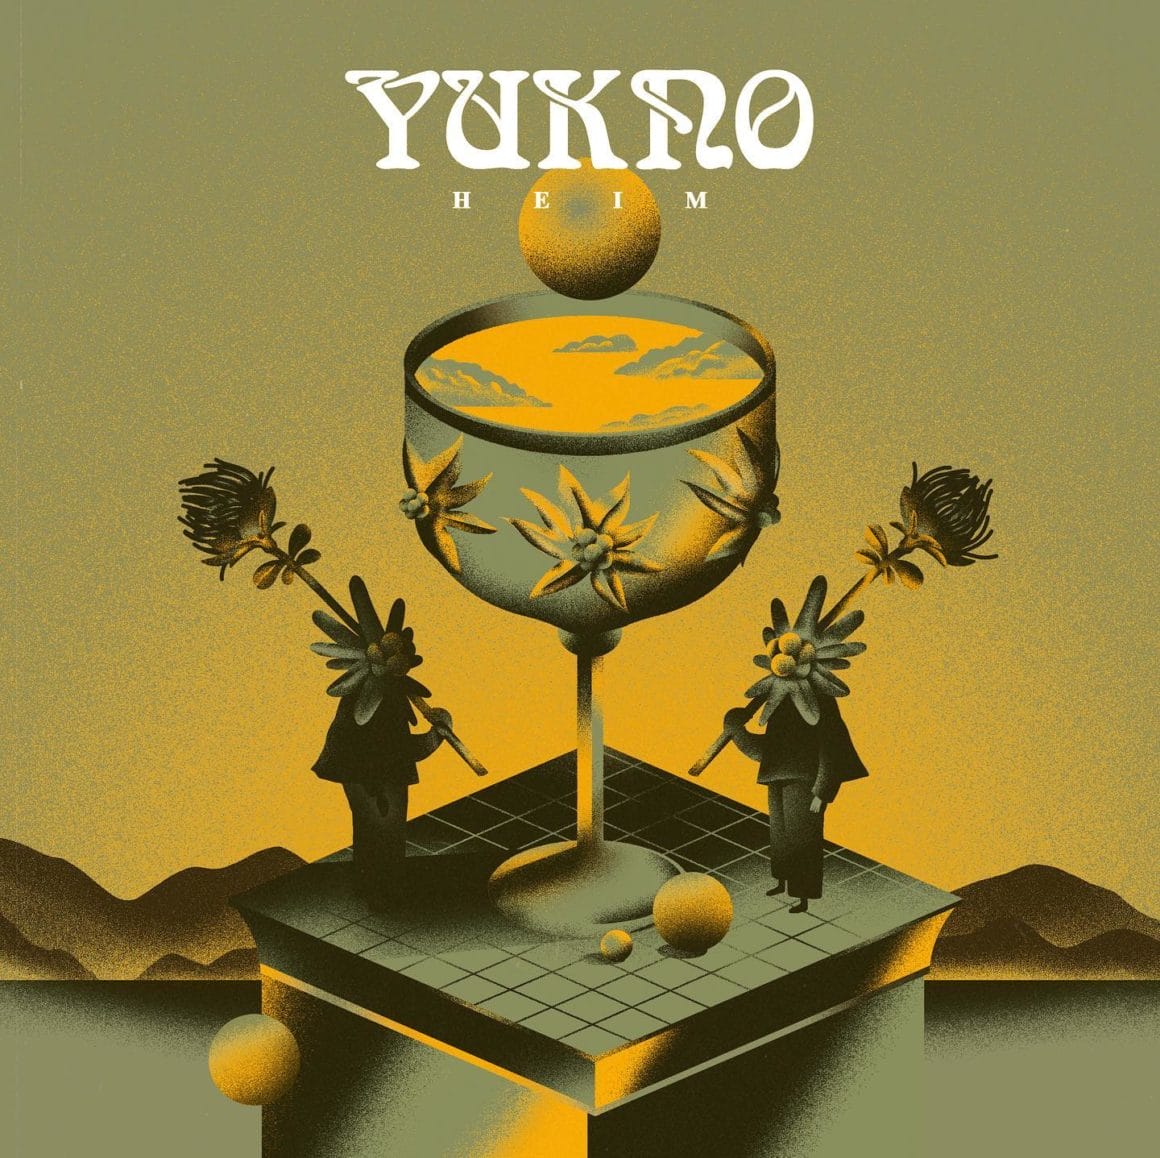 Couverture du single Heim de Yukno par Sandro Rybak